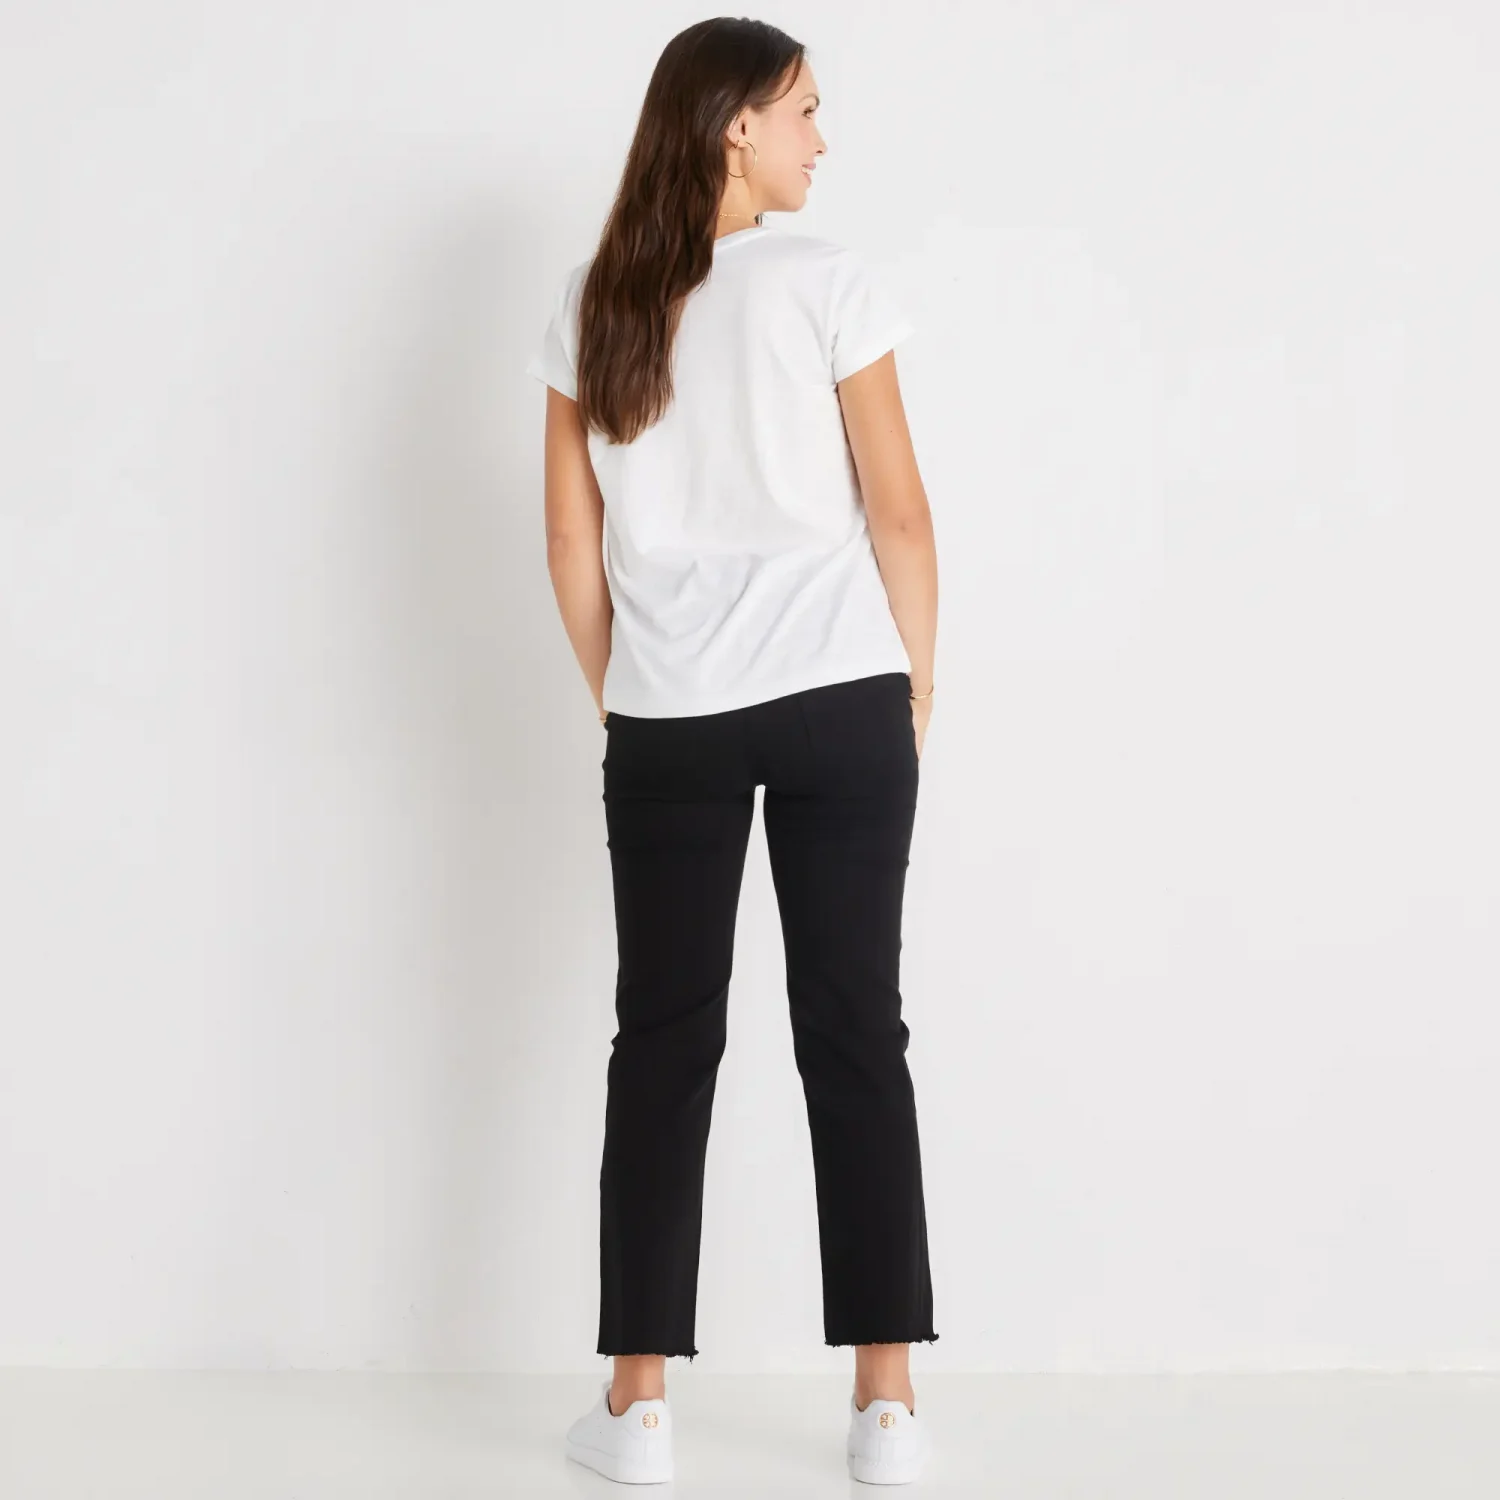 DL1961 brand stylish maternity black straight fit jeans